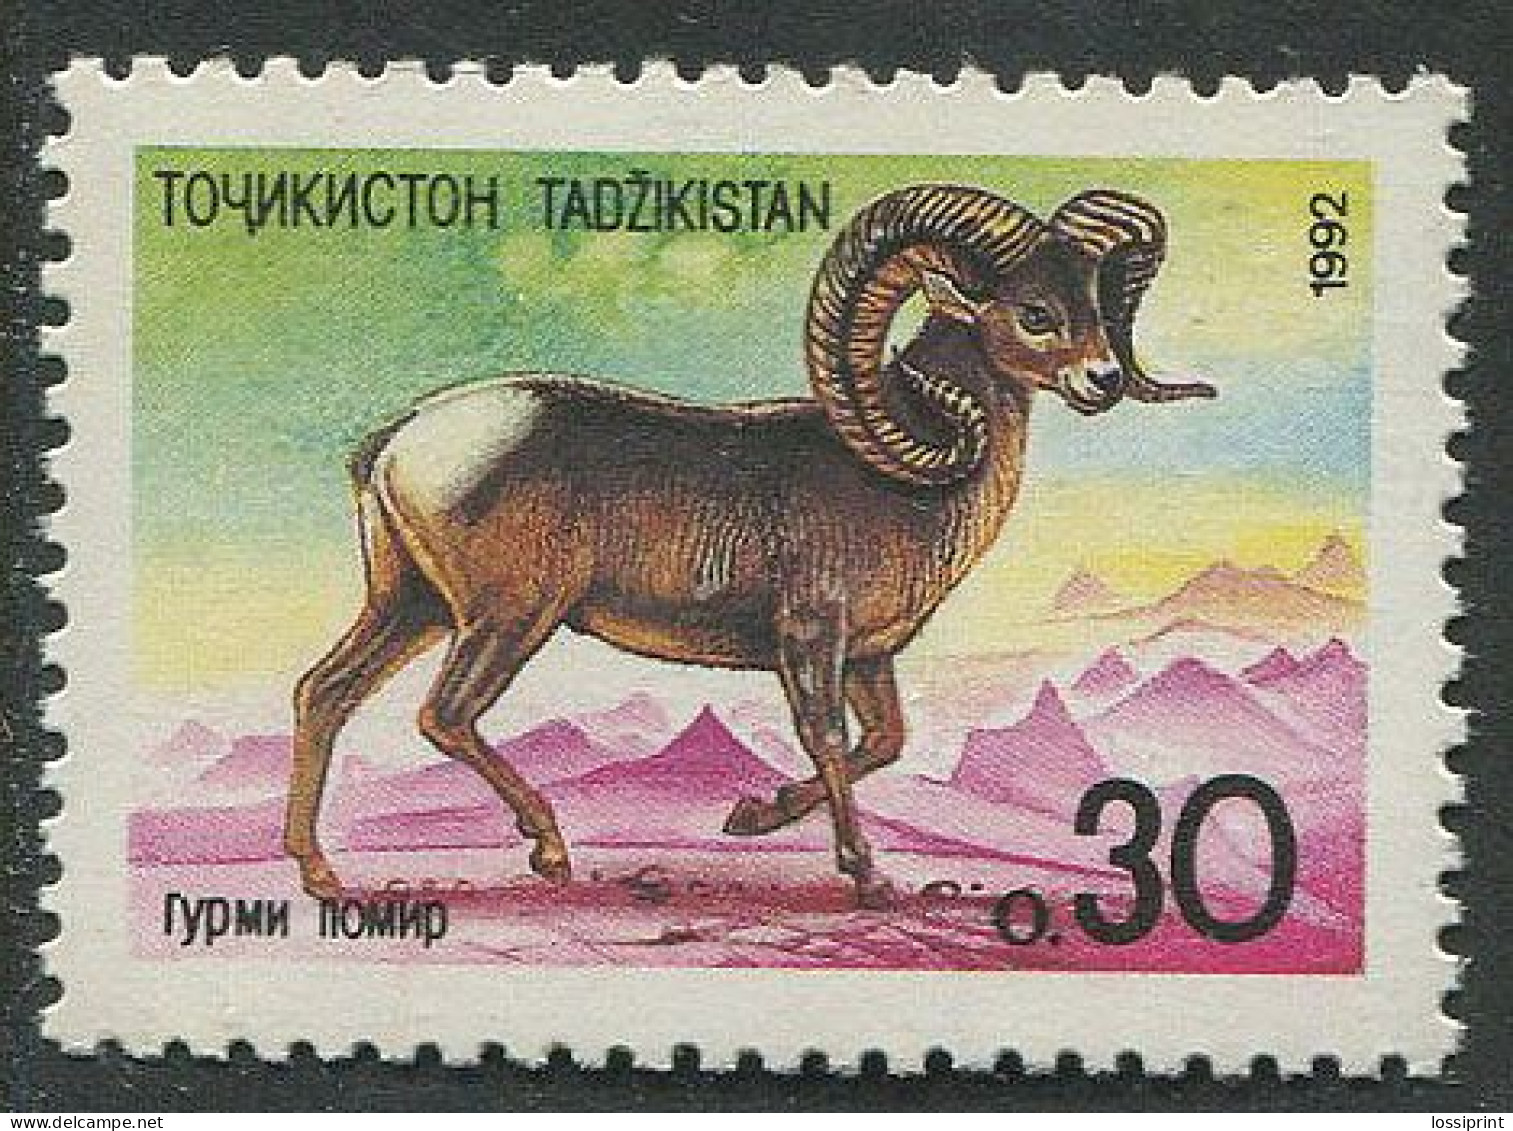 Tajikistan:Unused Stamp Animal, Goat, 1992, MNH - Tajikistan